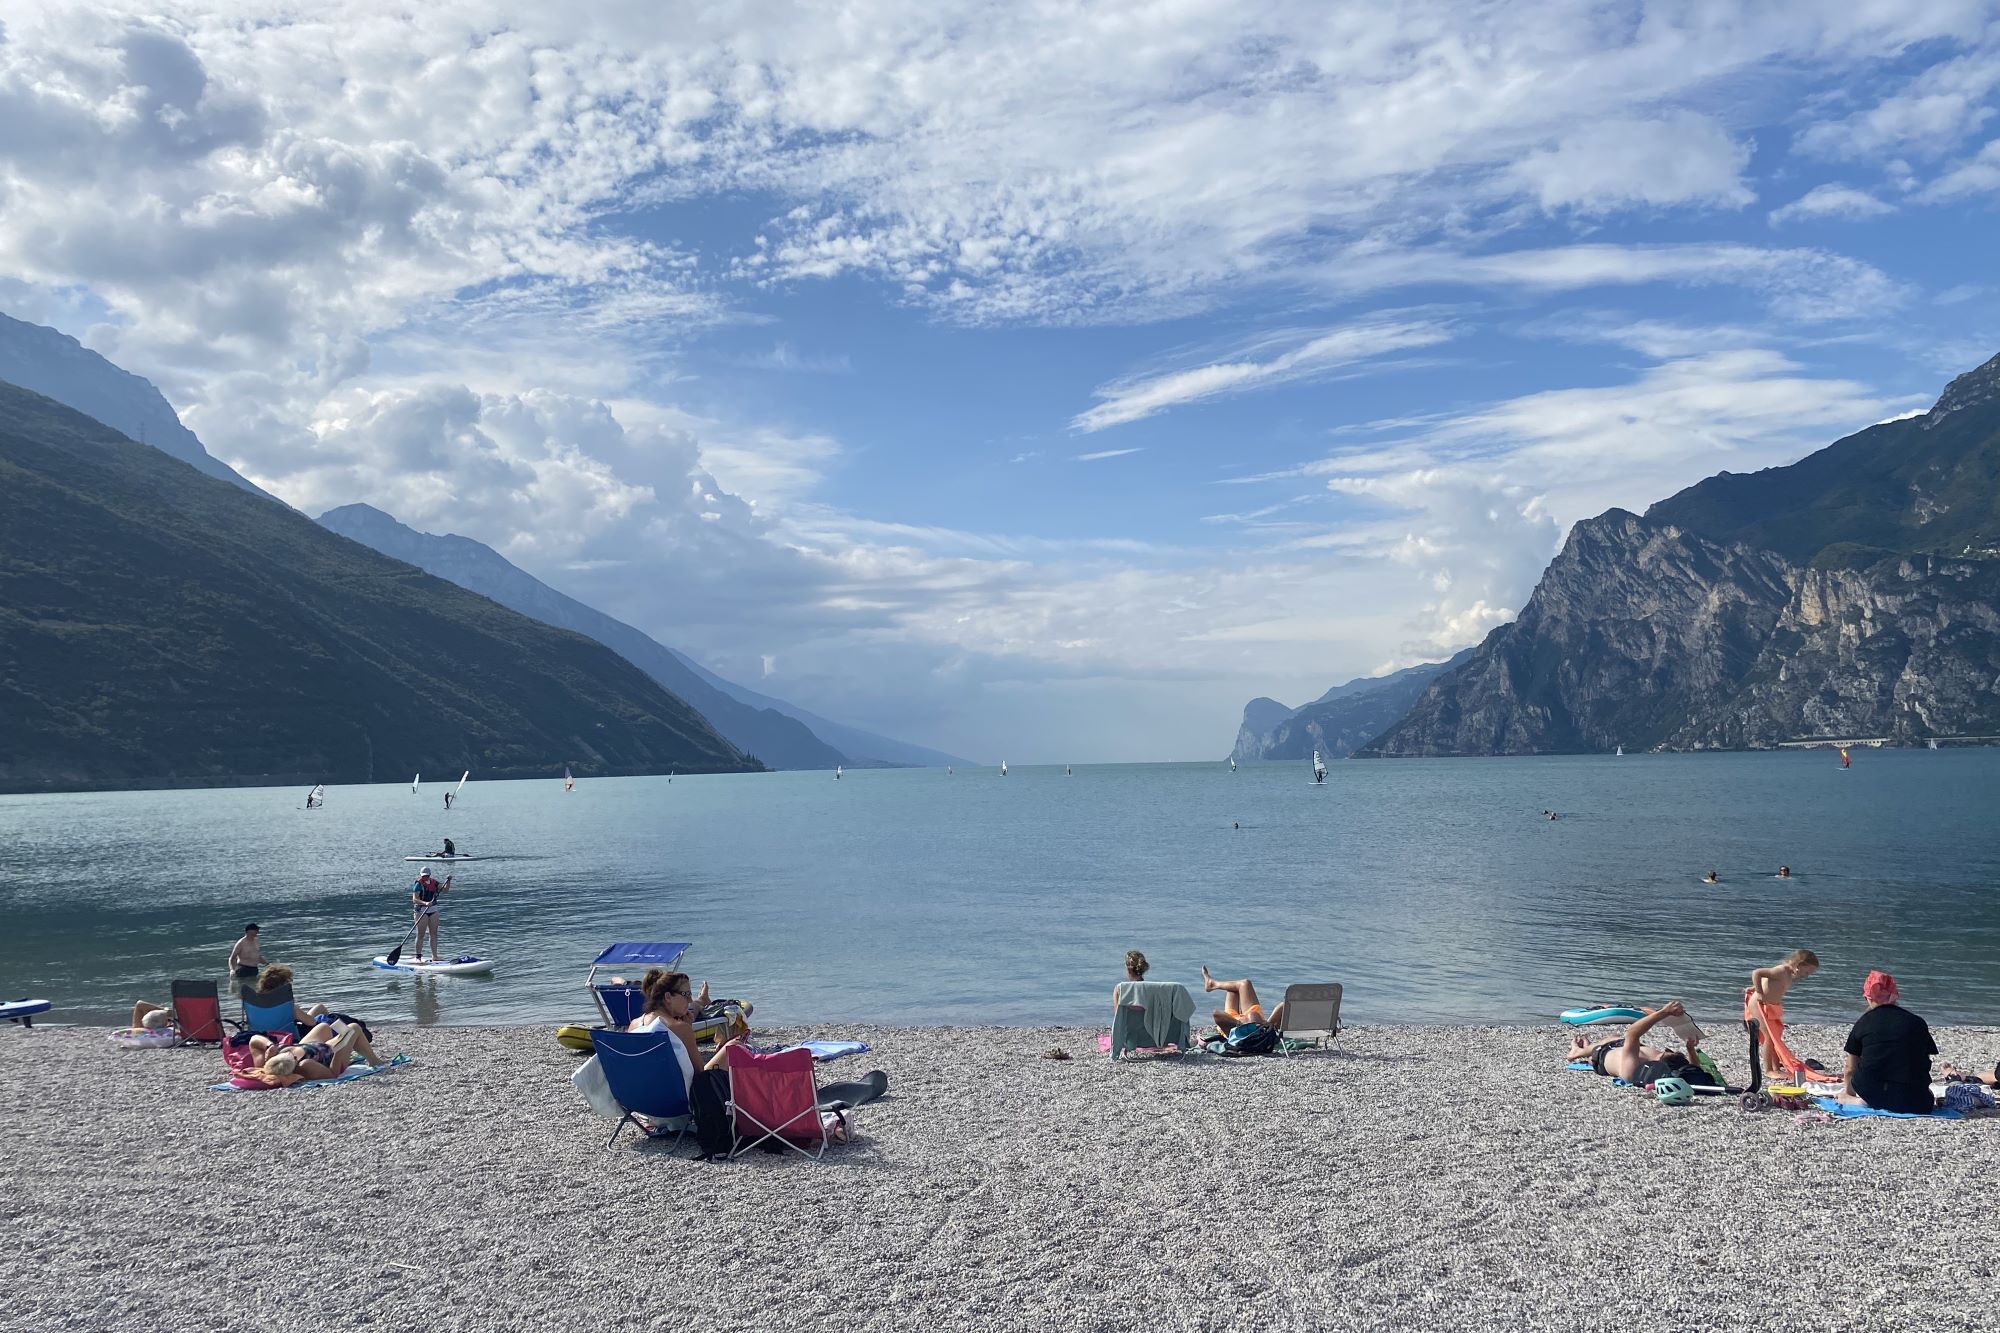 Sunbathing on the beach in Torbole on Lake Garda